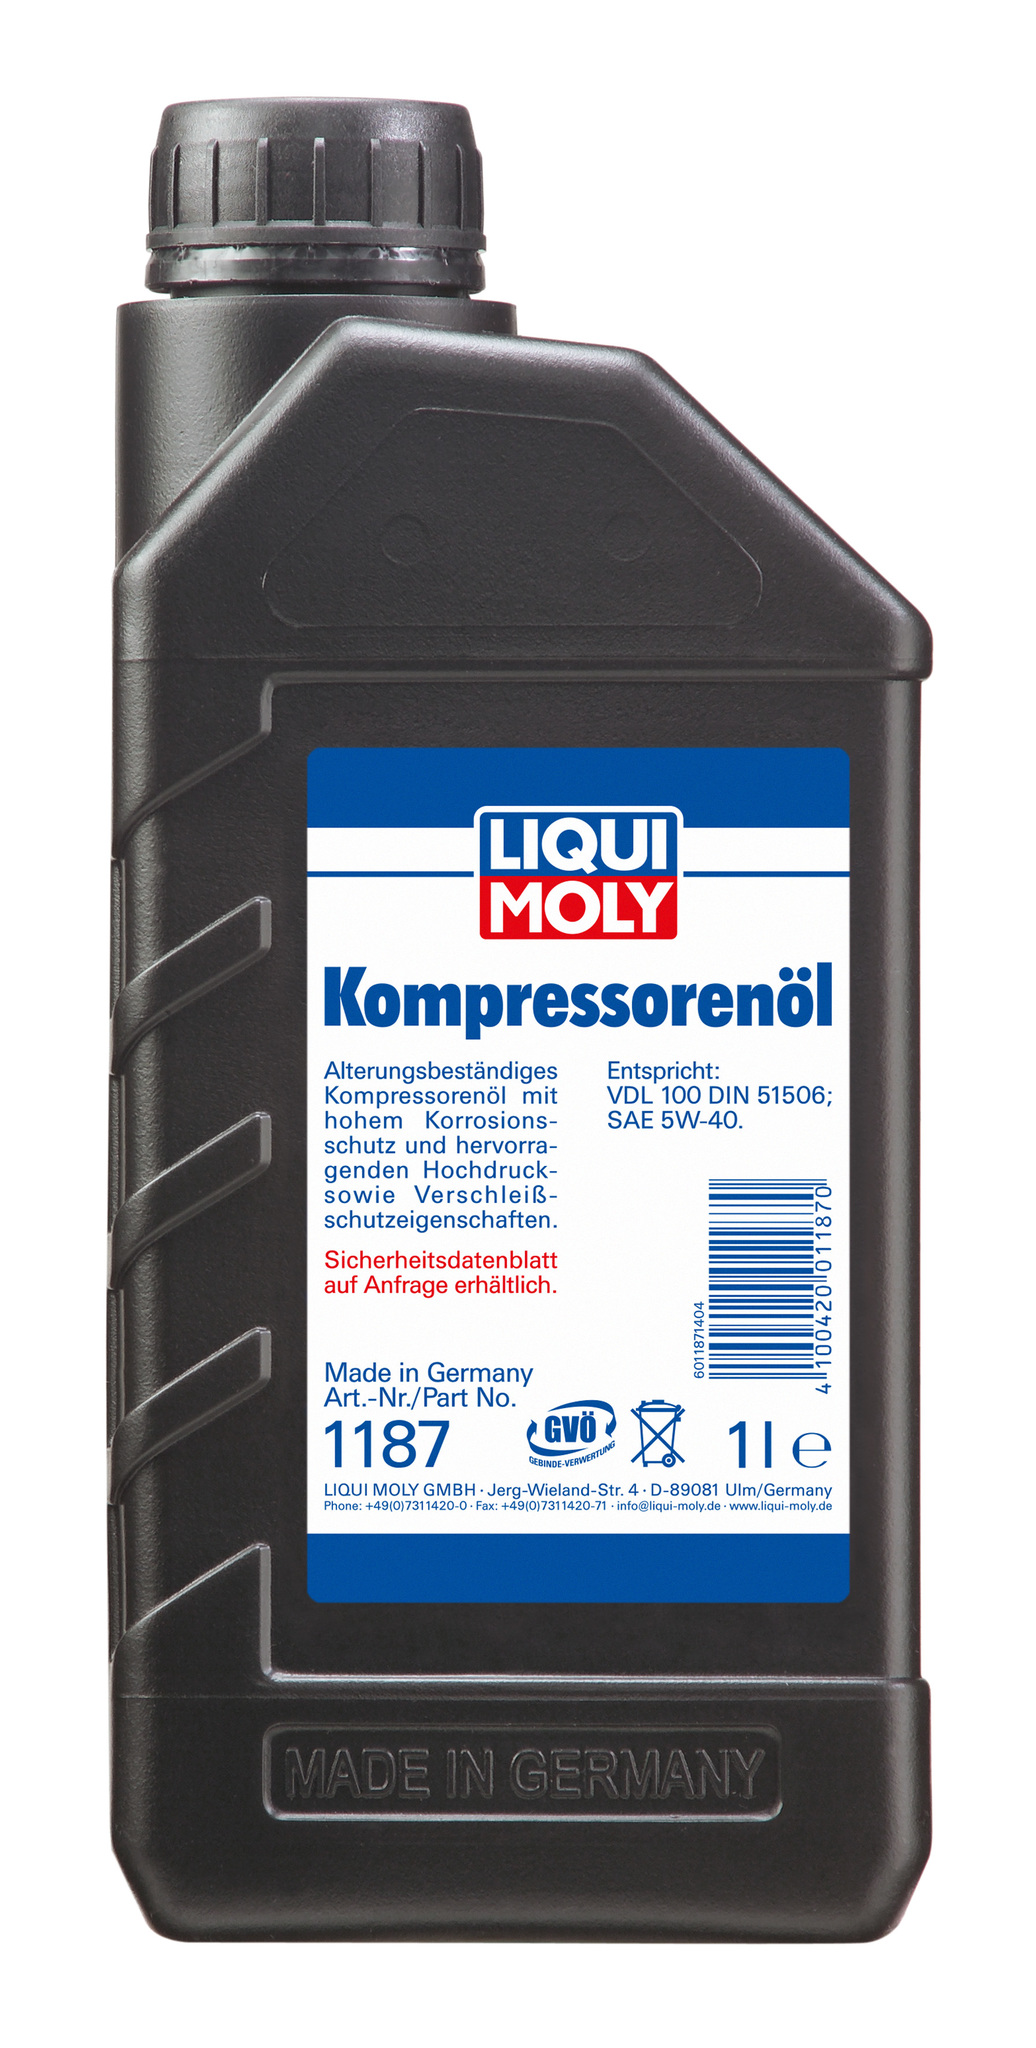 Liqui Moly Kompressorenoil Компрессорное масло